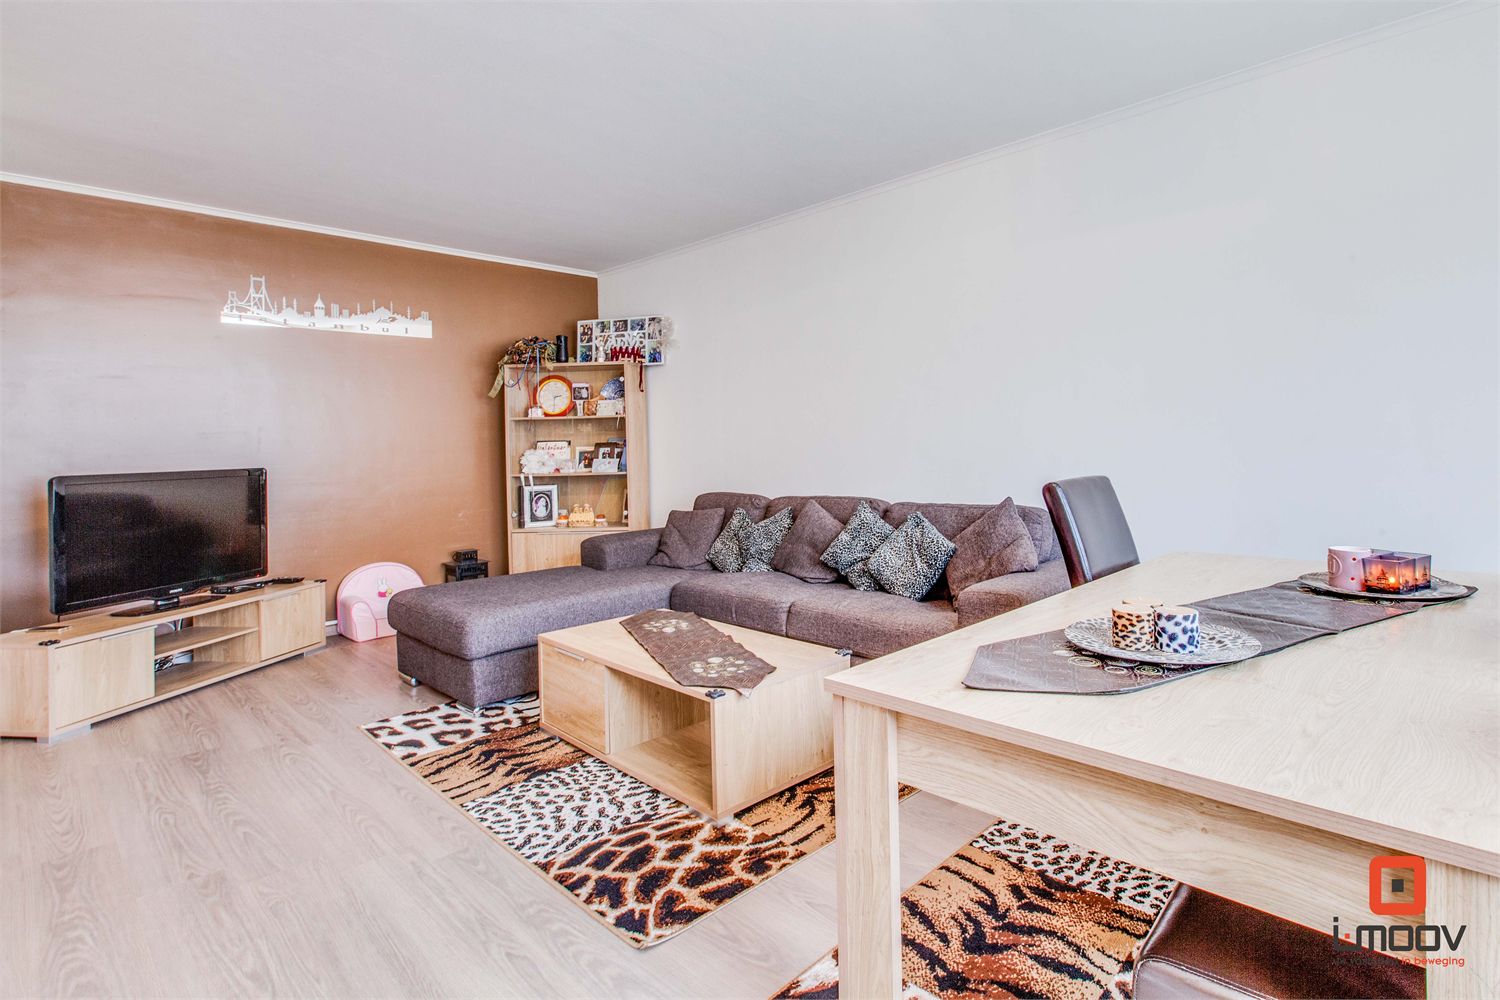 Appartement verkocht in Sint-Niklaas